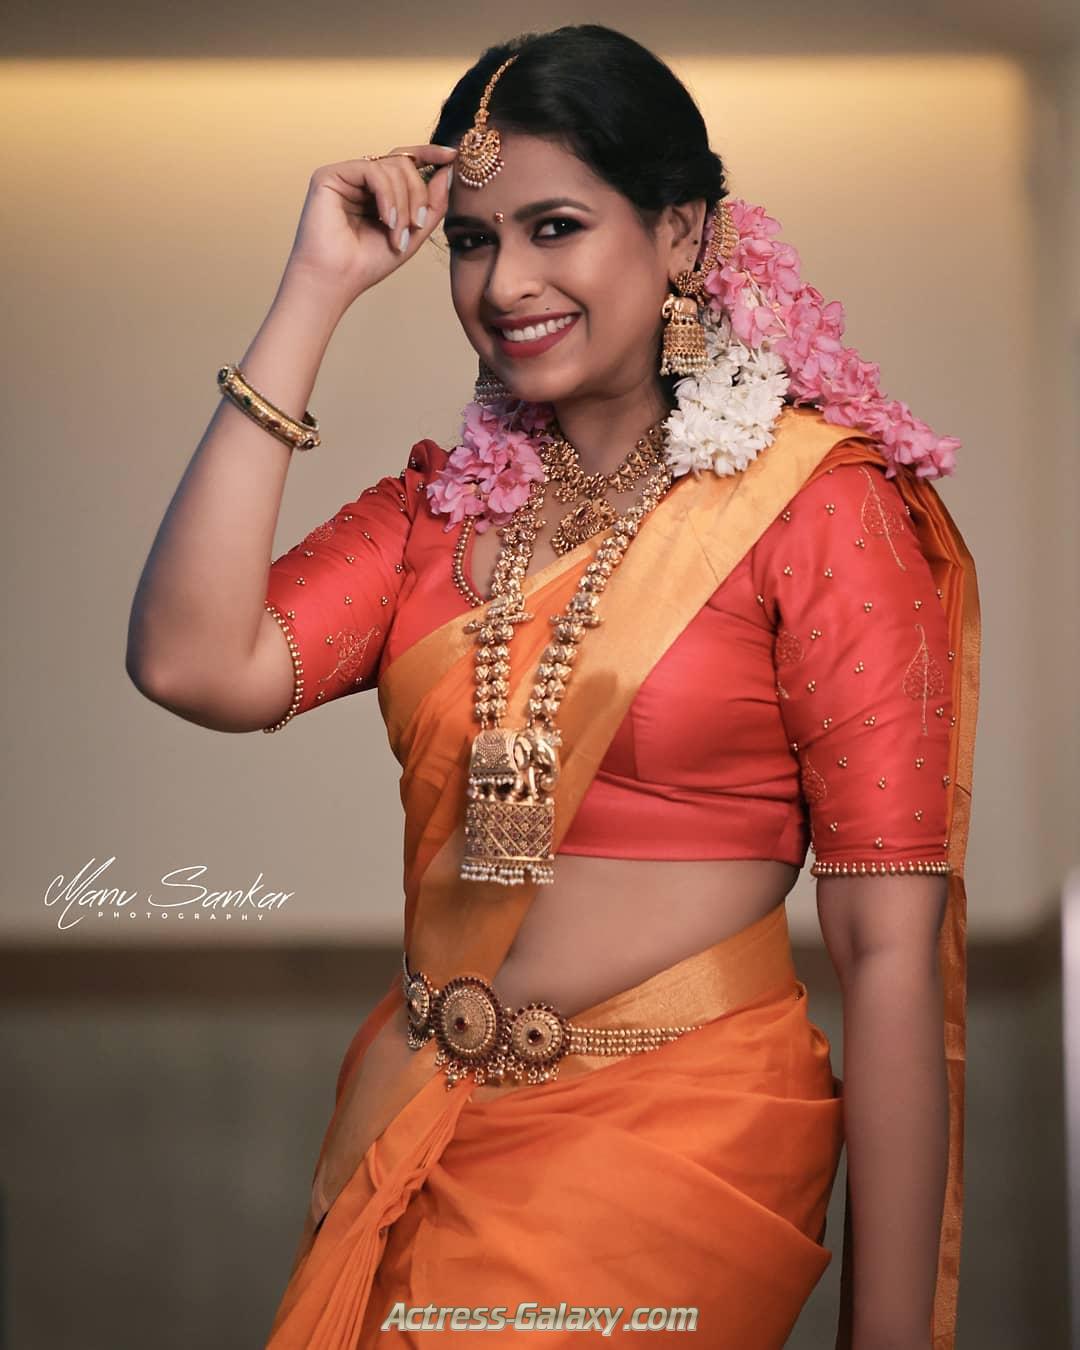 Sadhika Venugopal Hot Photos in Wedding Saree Side View